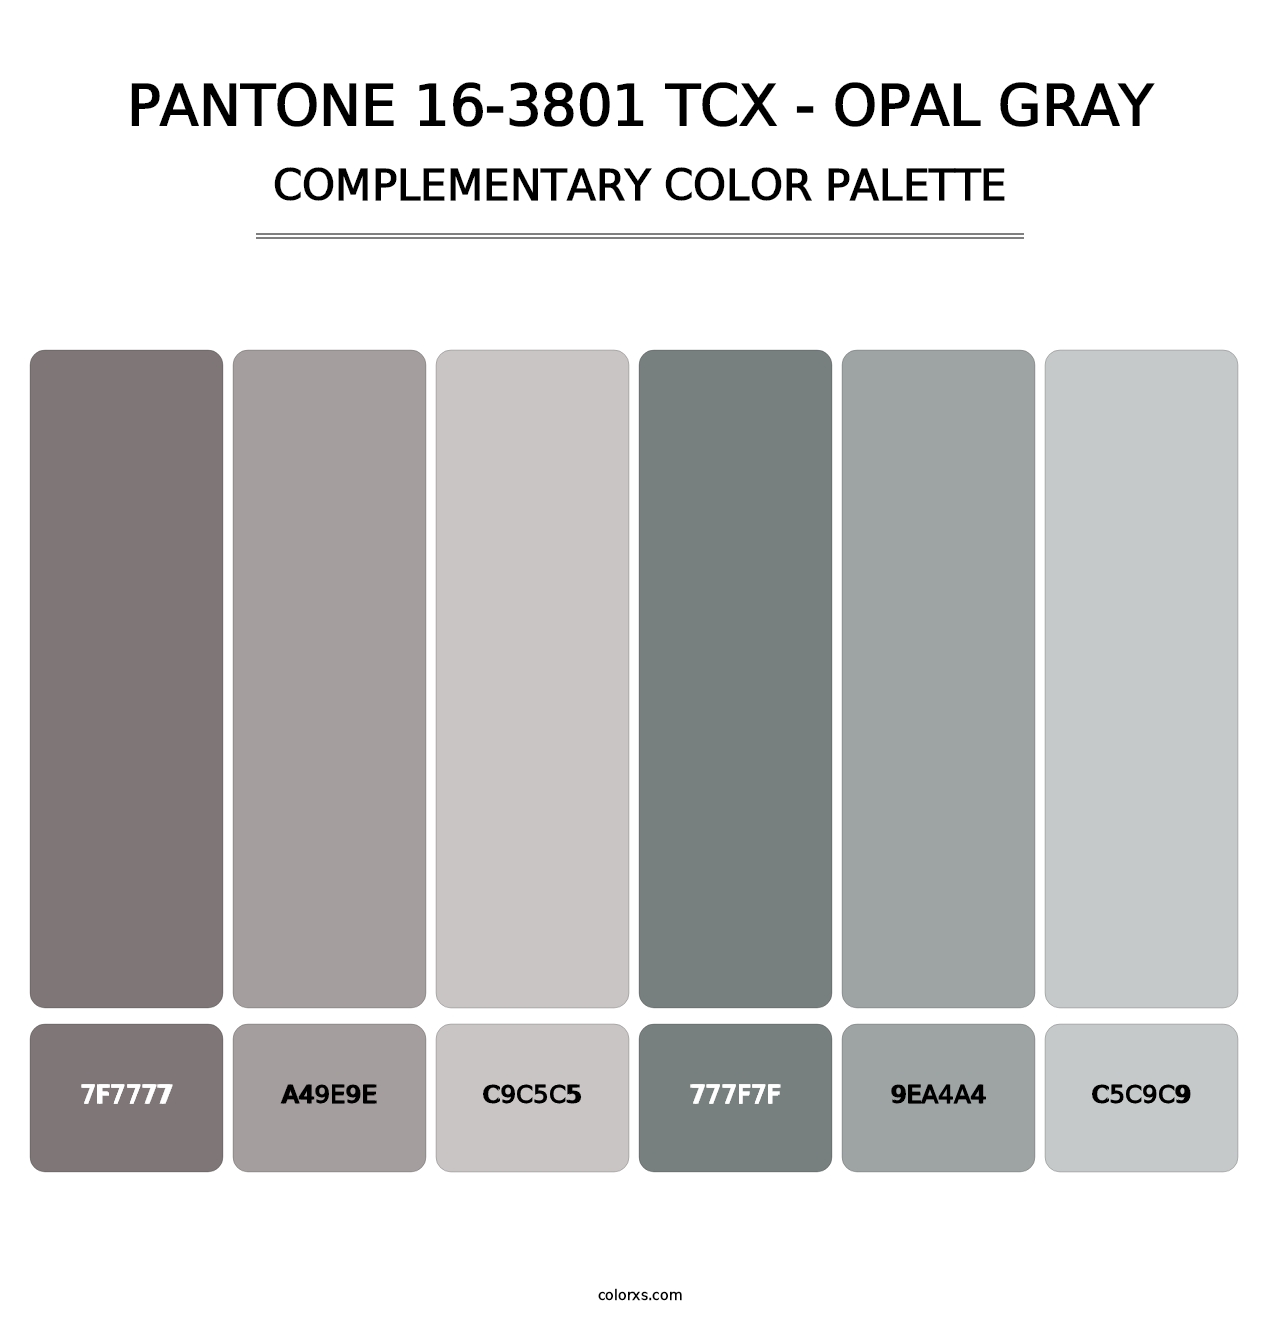 PANTONE 16-3801 TCX - Opal Gray - Complementary Color Palette